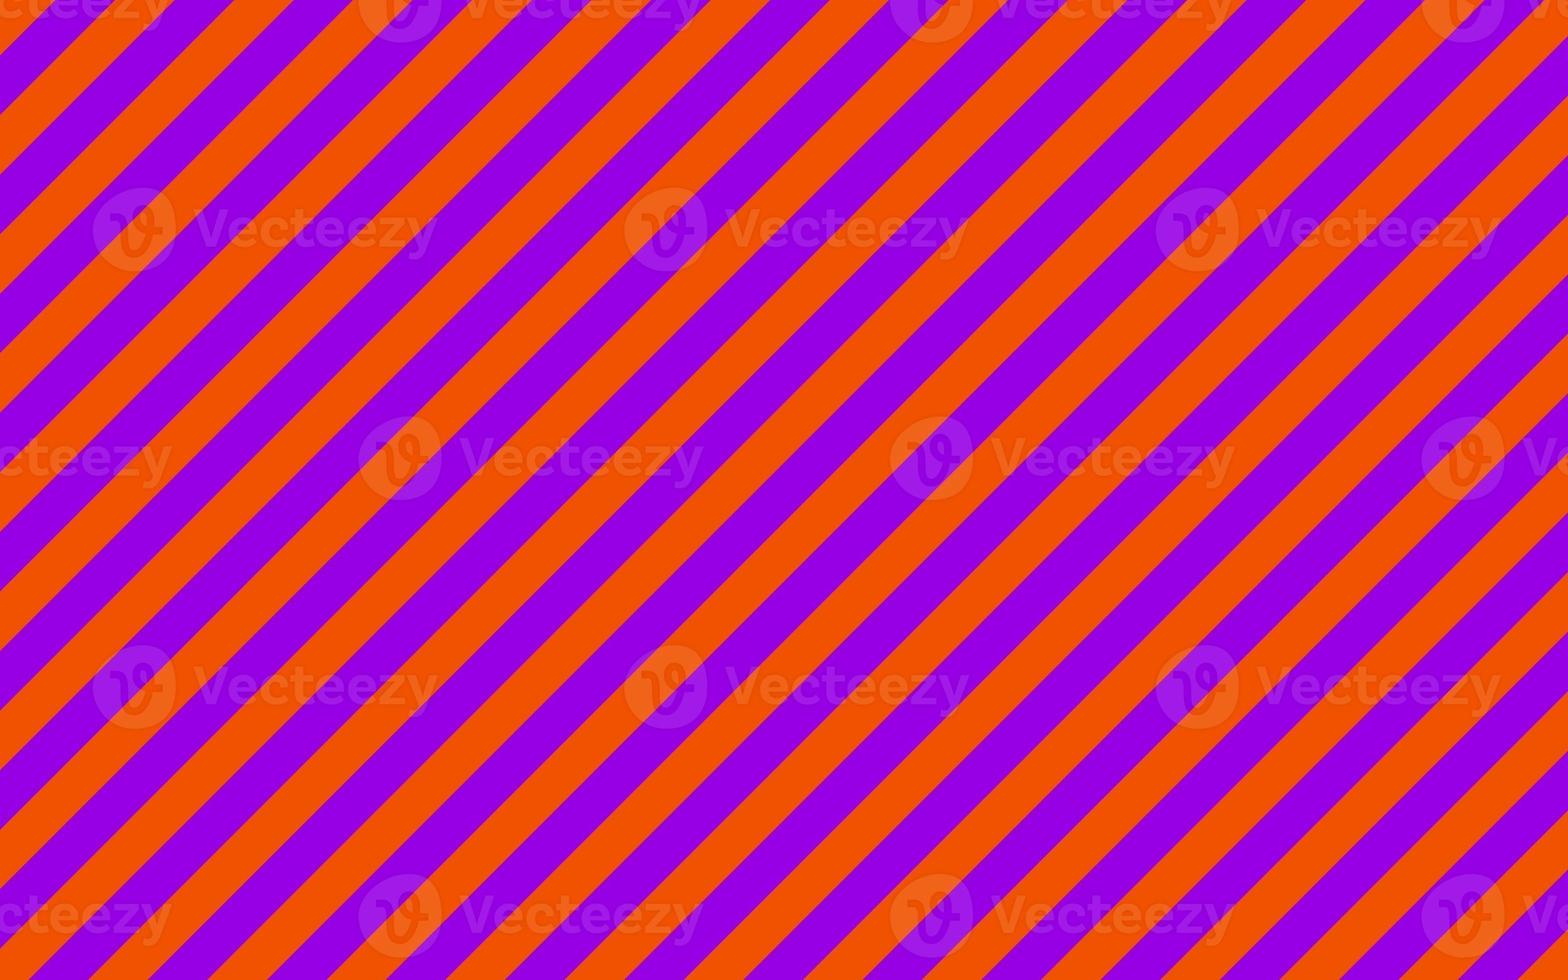 Seamless diagonal violet and orange pattern stripe background. Simple and soft diagonal striped background. Retro and vintage design concept. Suitable for leaflet, brochure, poster, backdrop, etc. photo